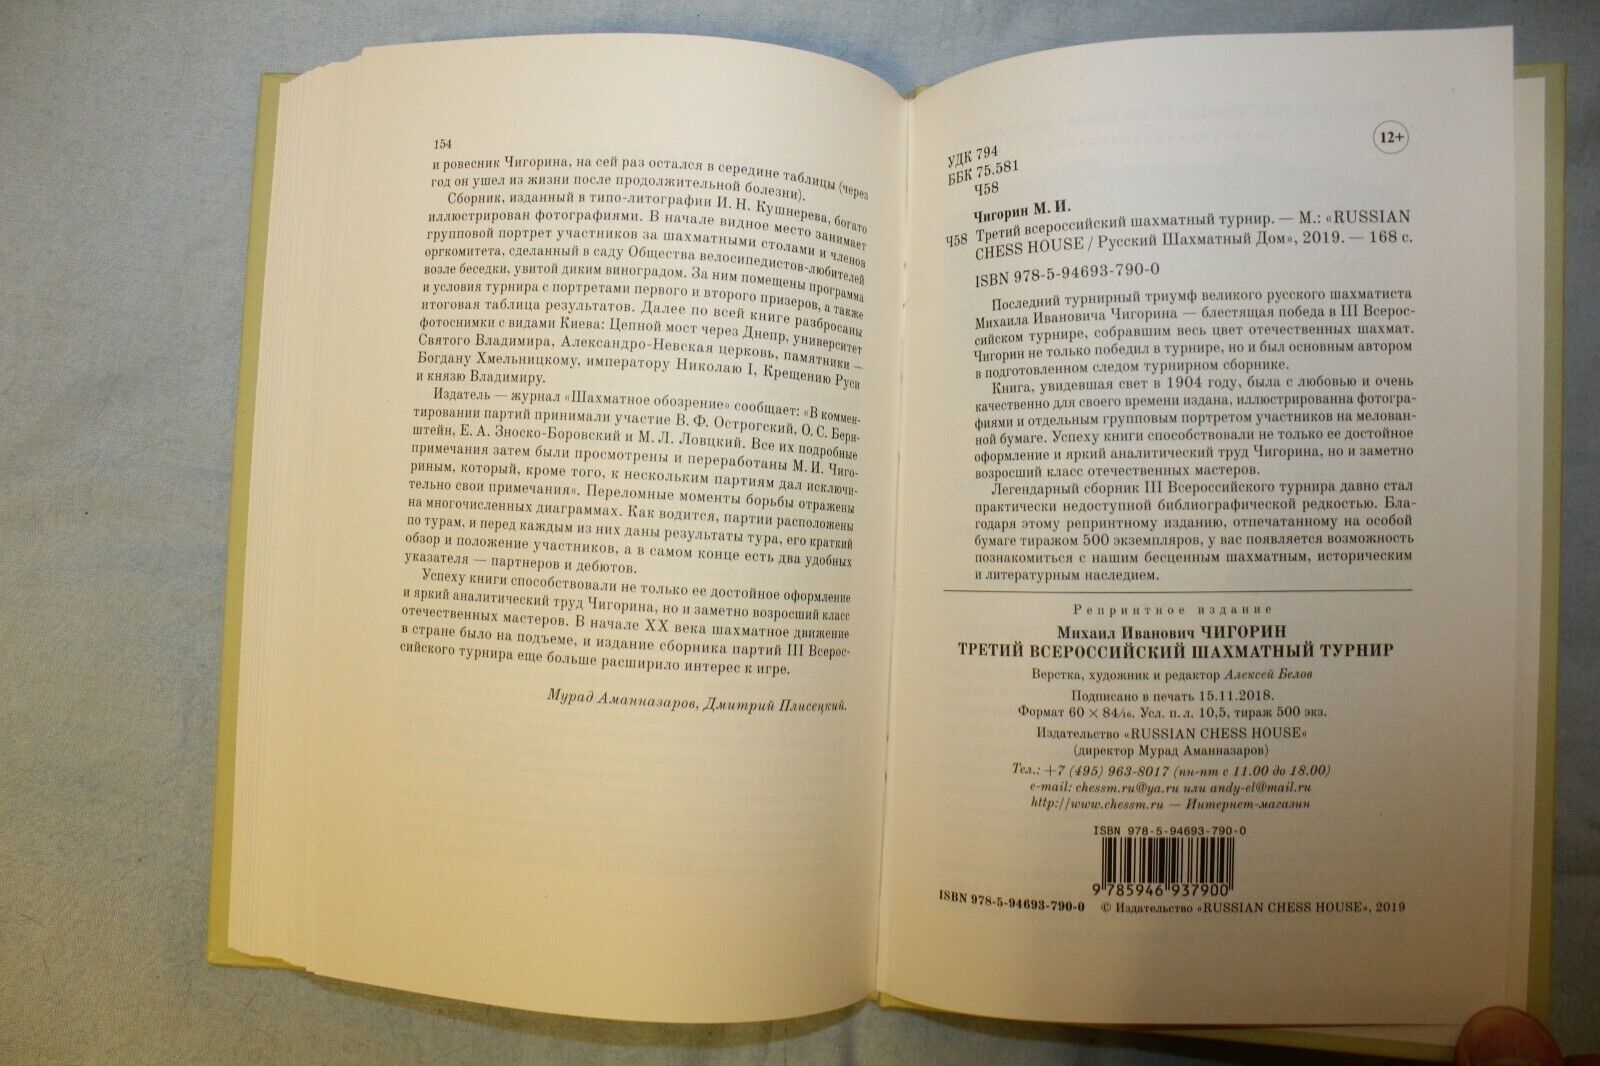 11131.Chess Book: Third All-Russian Chess Tournament 1903. Chigorin. Reprinted edition